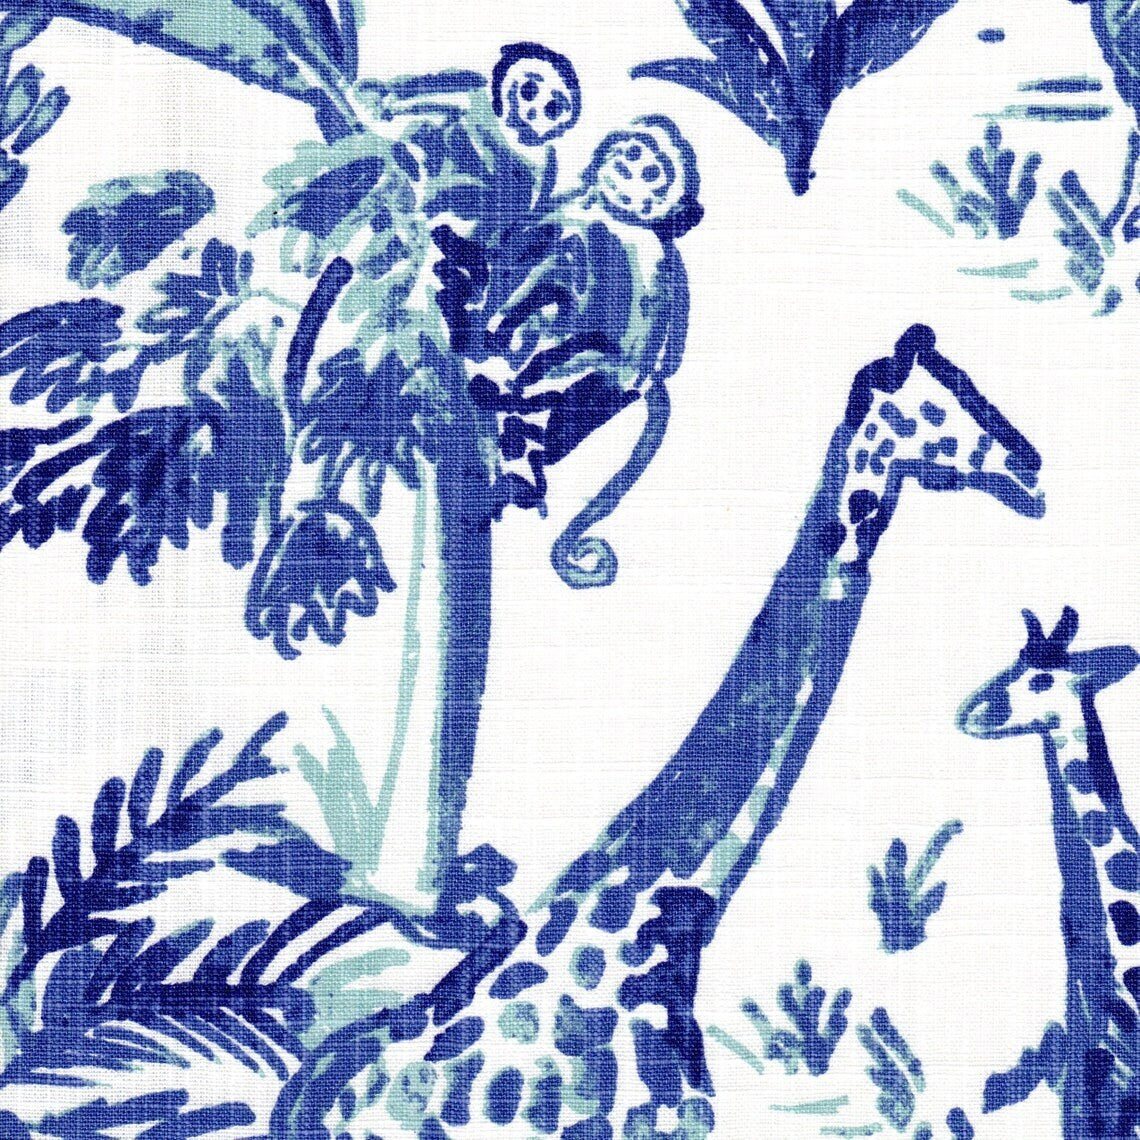 rod pocket curtains in meru commodore blue, cancun blue safari animal toile